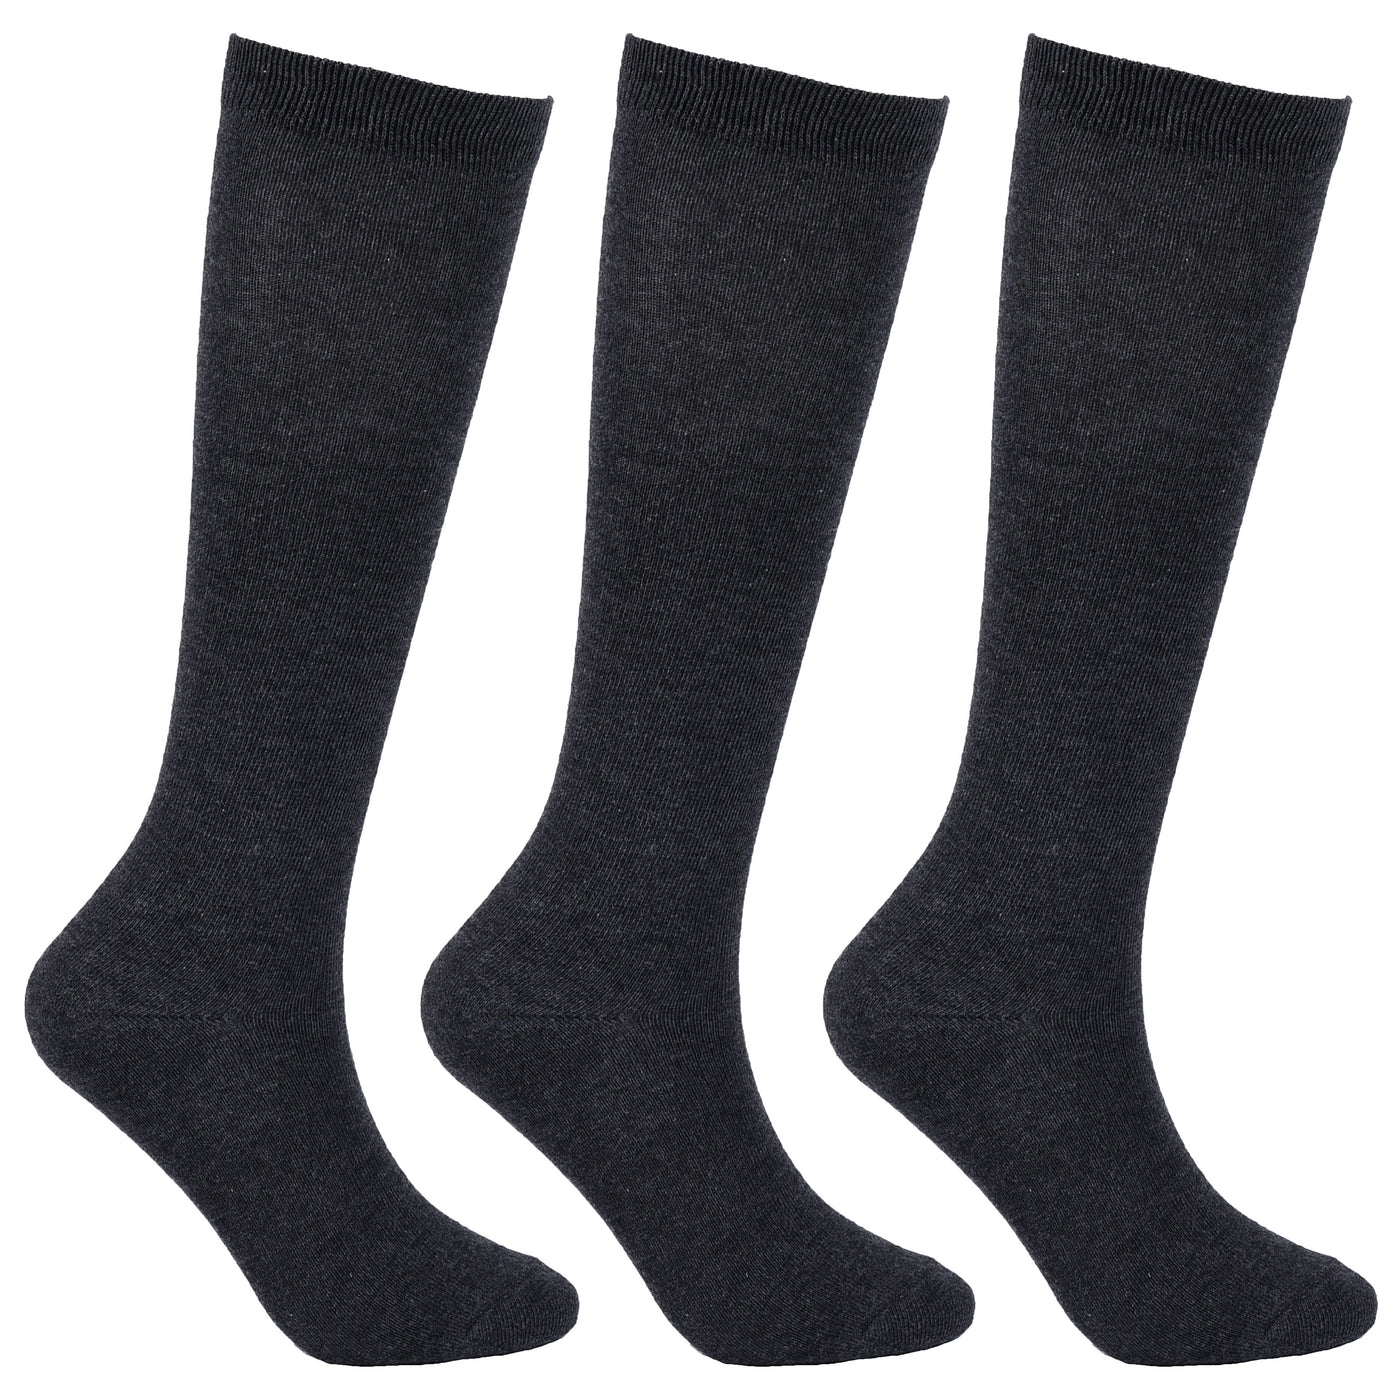 Laulax 3 Pairs Finest Combed Cotton Girls School Knee High Socks, Gift Set, Black, Size 4-7